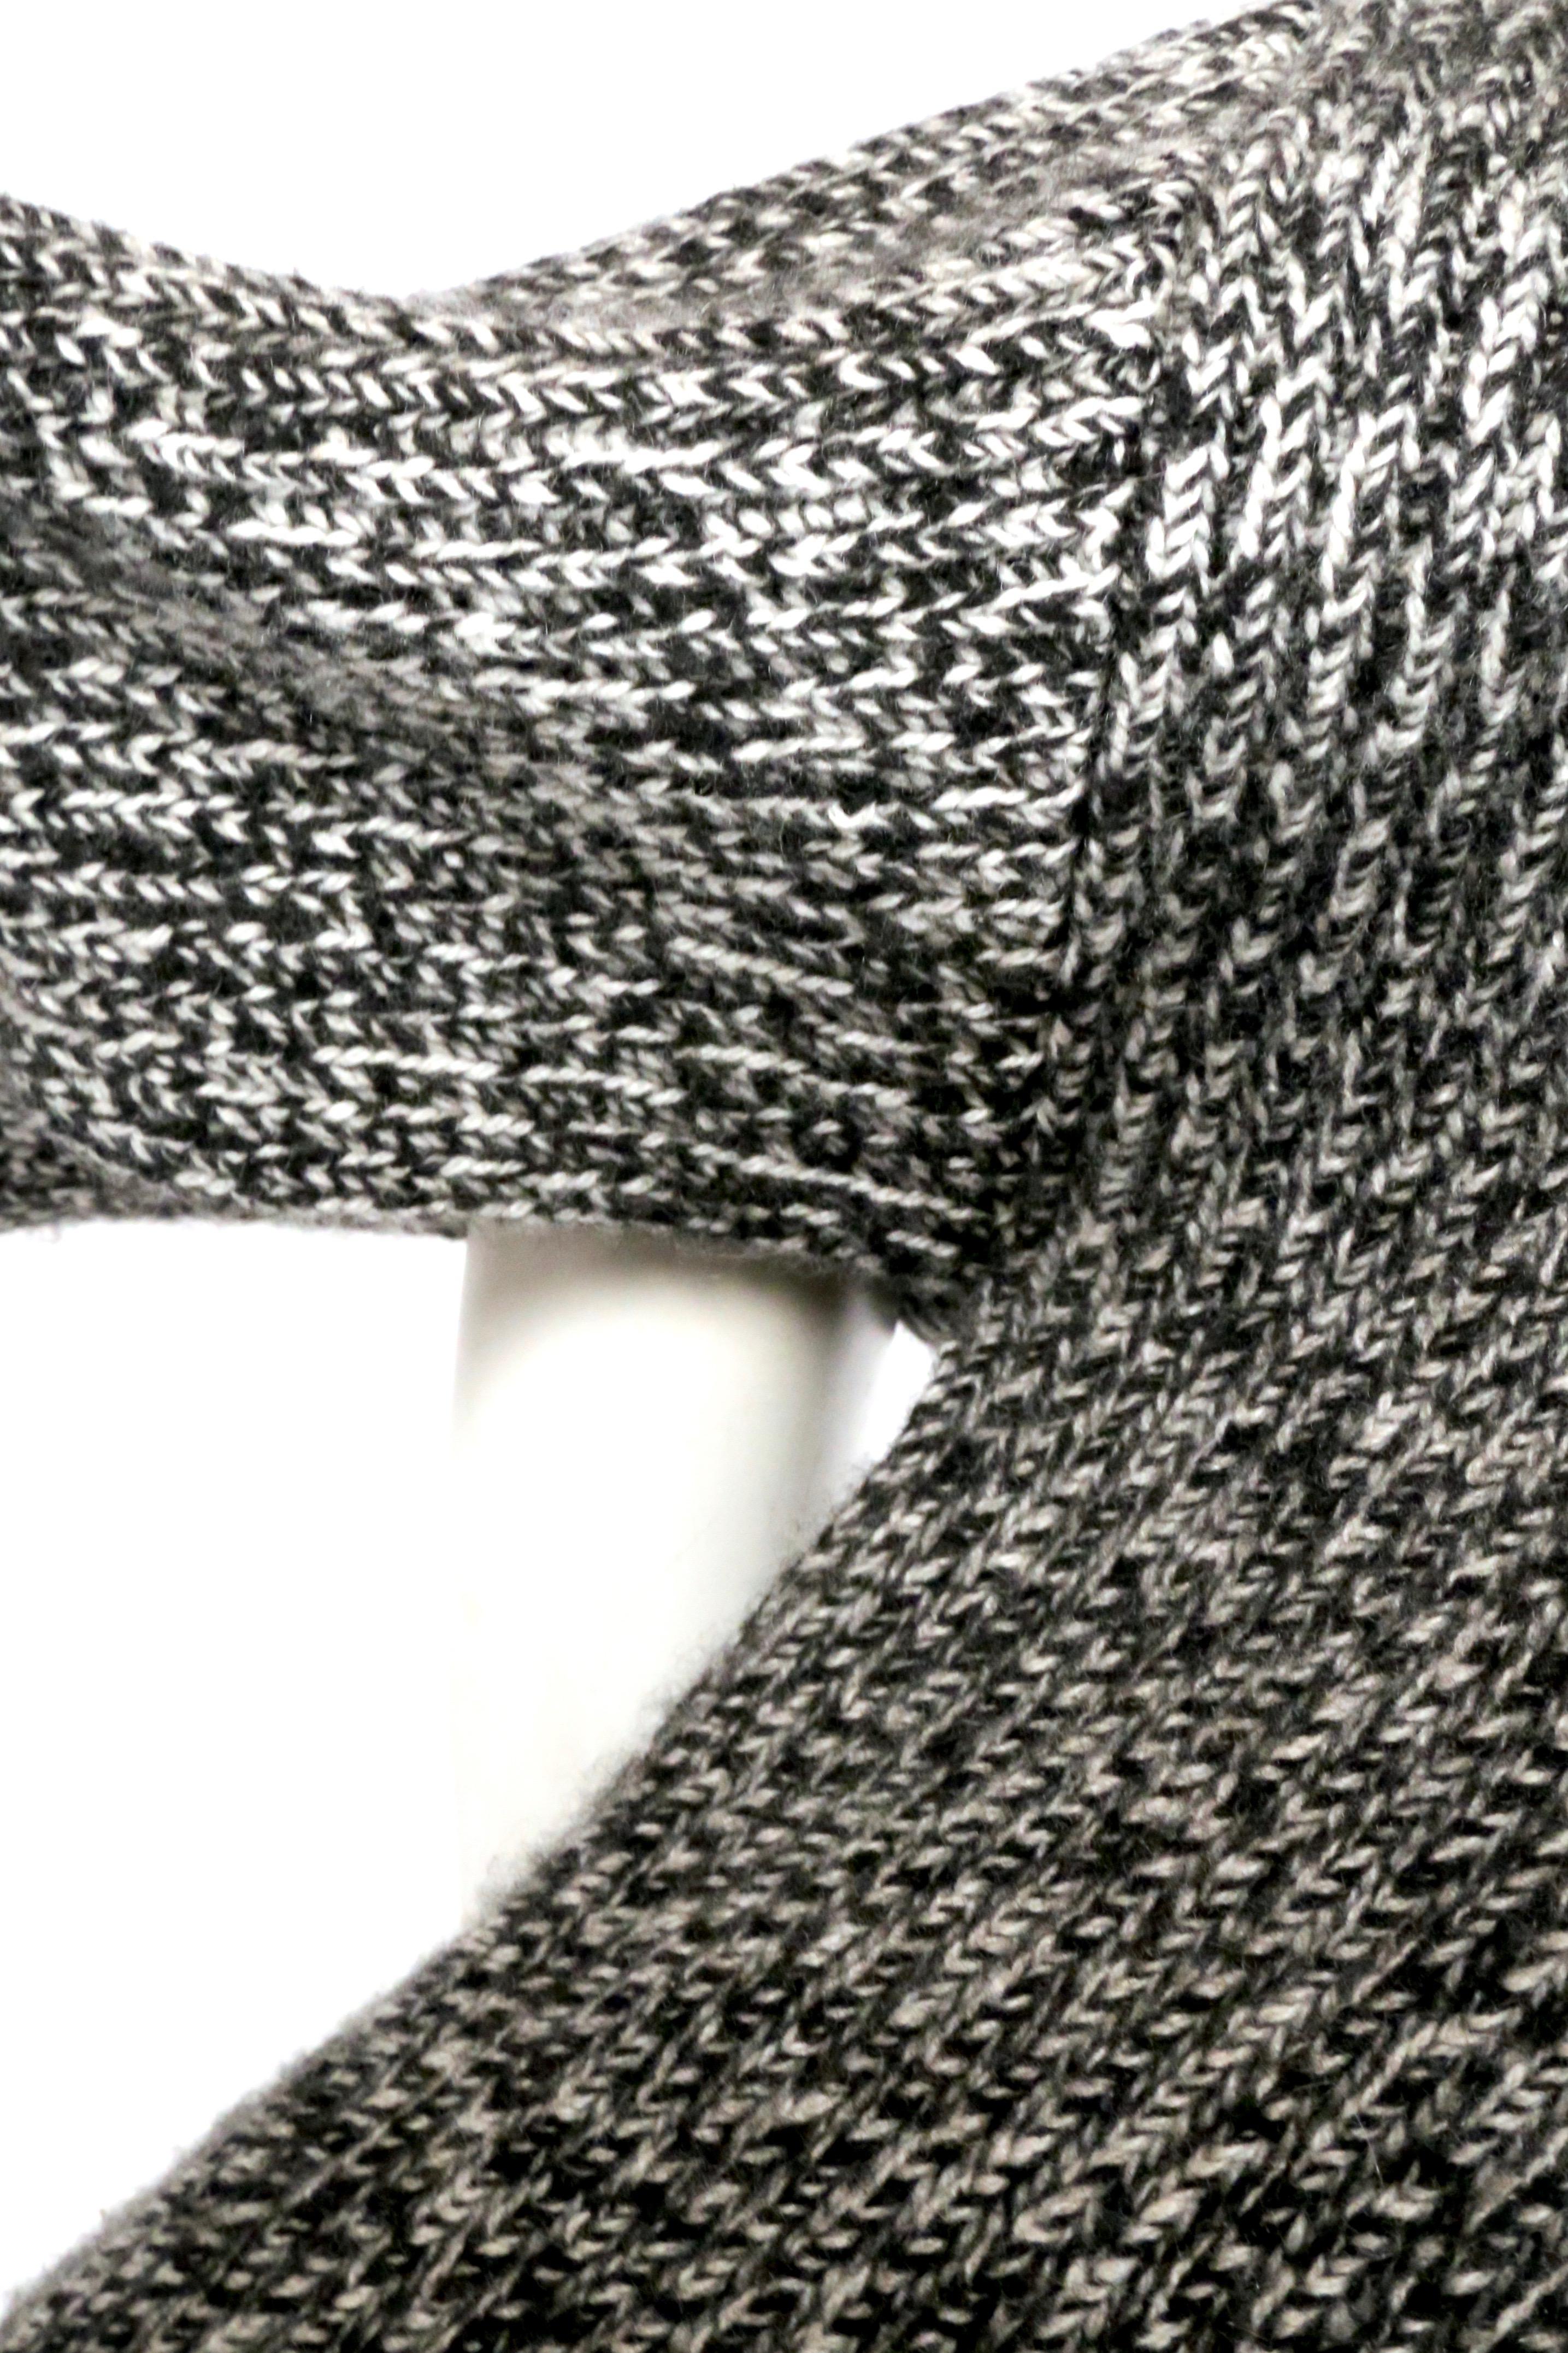 CELINE by PHOEBE PHILO black cashmere turtleneck sweater with underarm cutouts 2